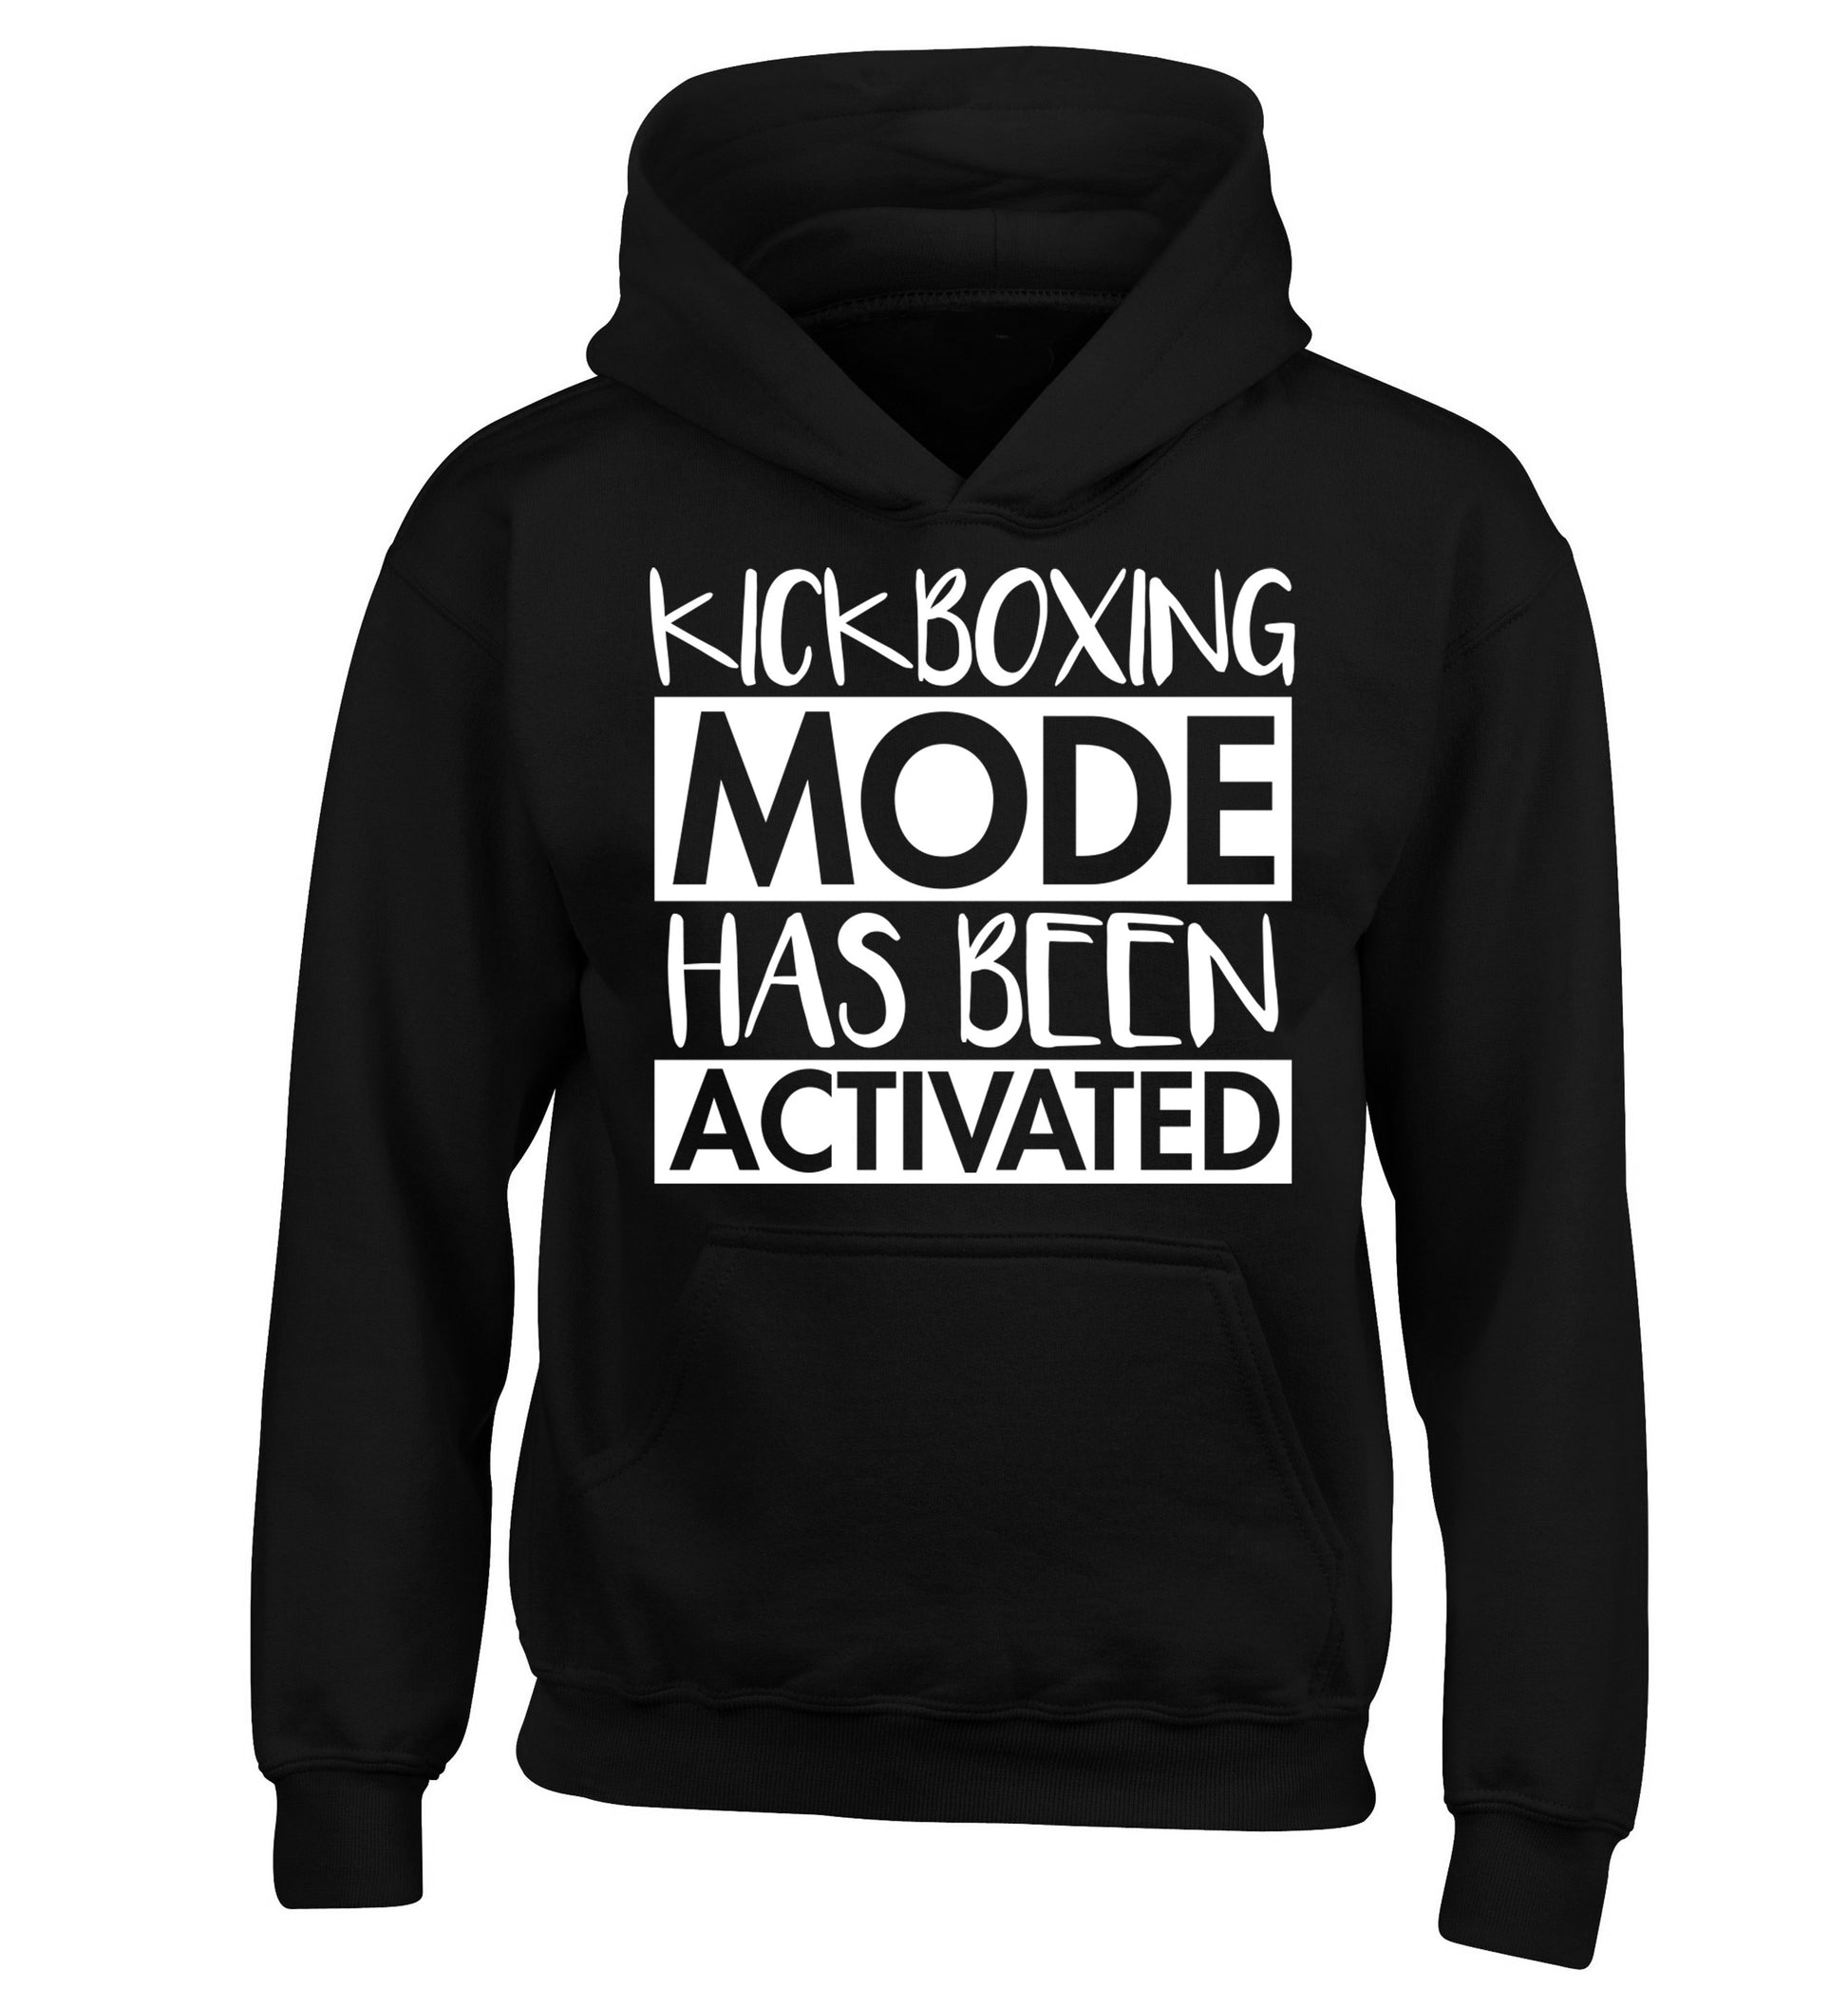 Kickboxing mode activated children's black hoodie 12-14 Years